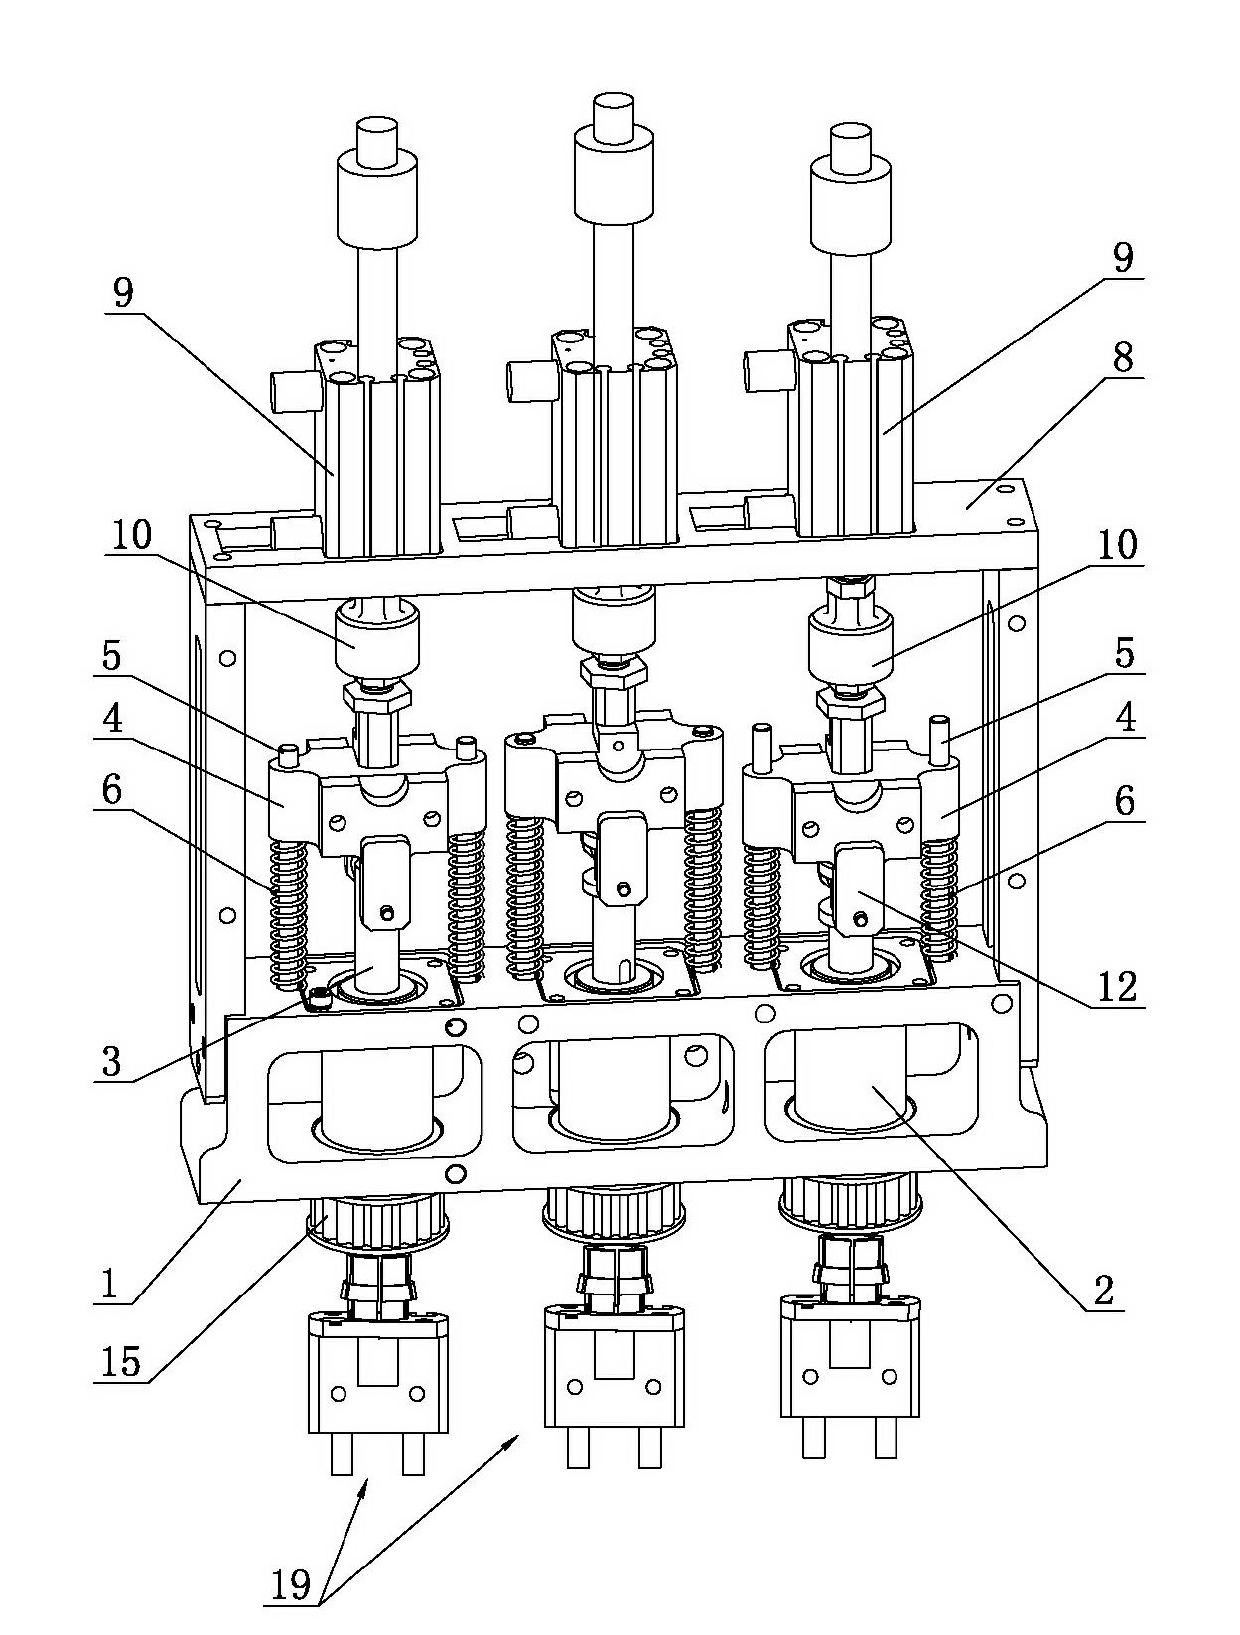 Head gripper linking mechanism of plug-in machine